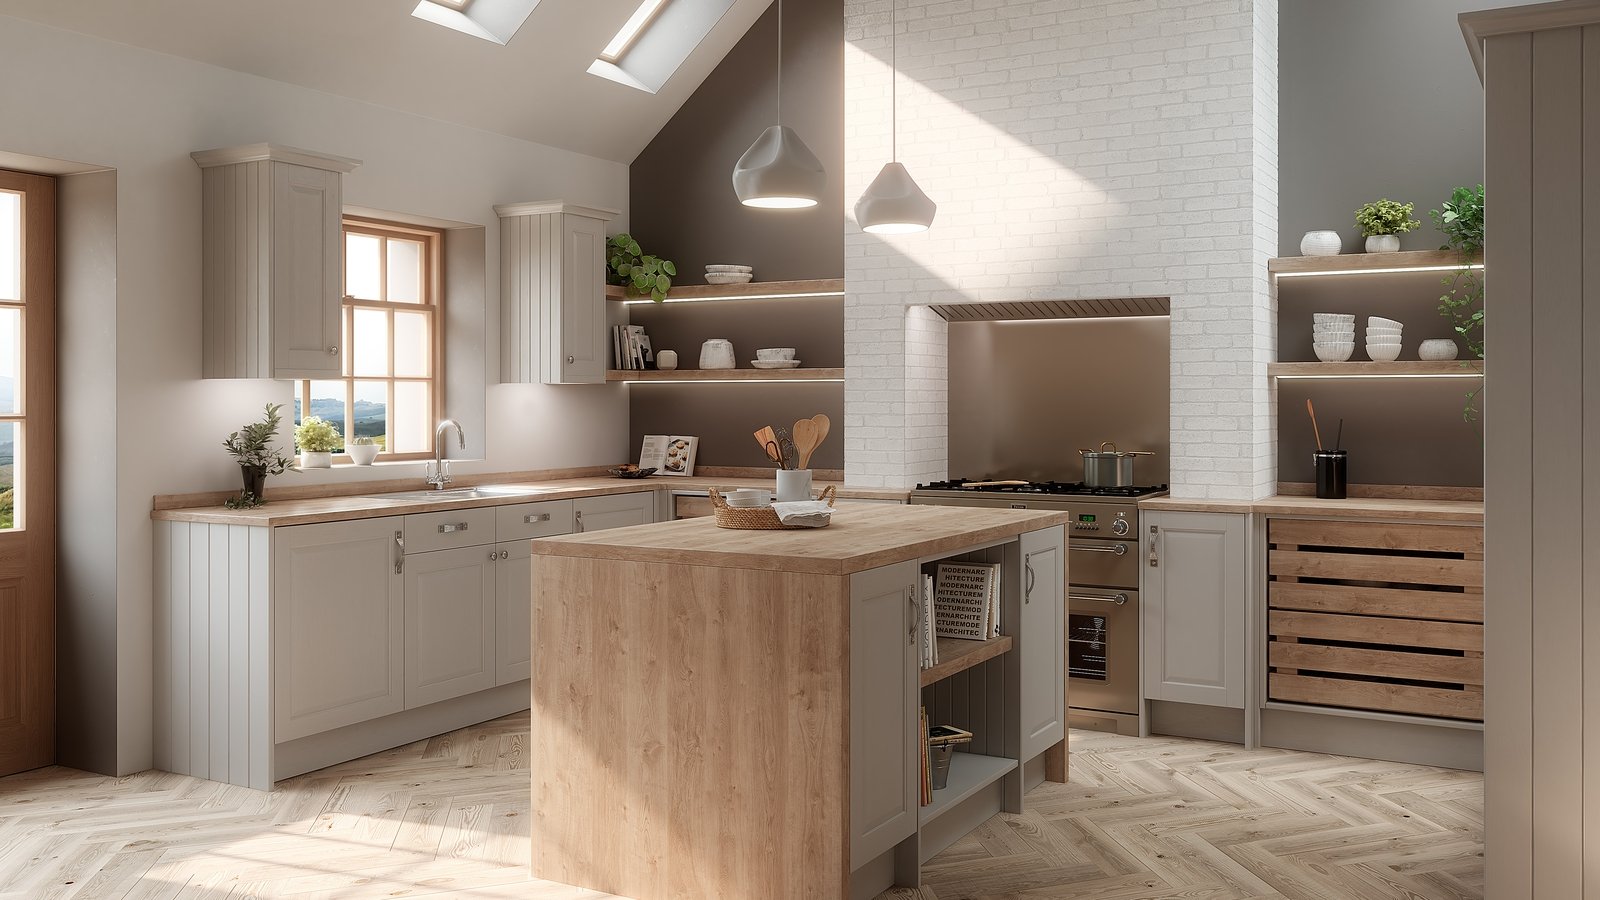 Kitchen design trends for 2022